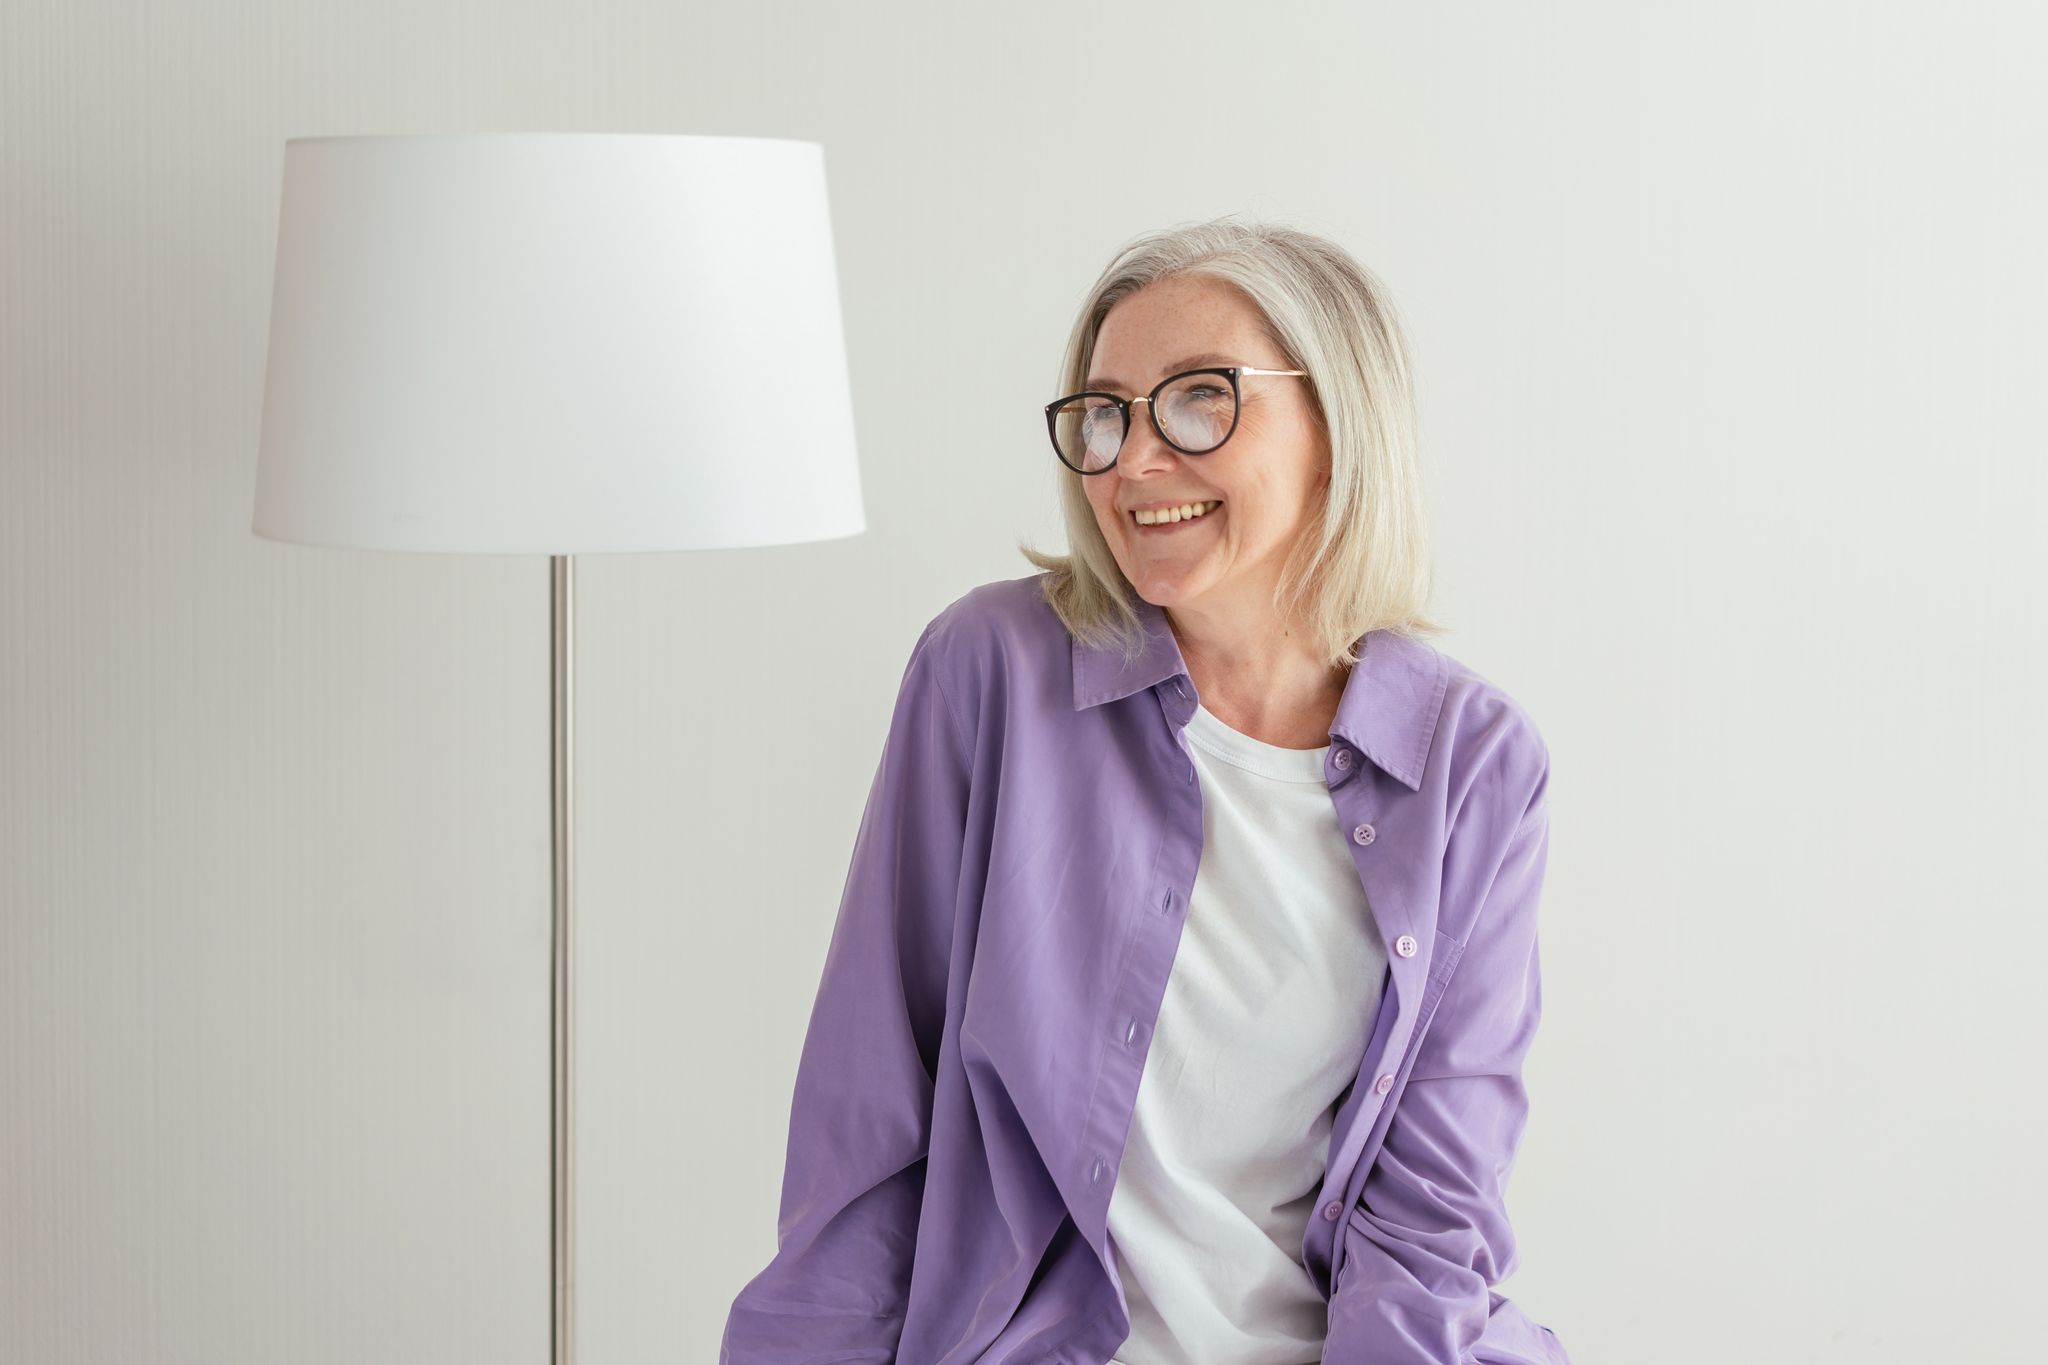 Smiling senior woman with glasses portrait.